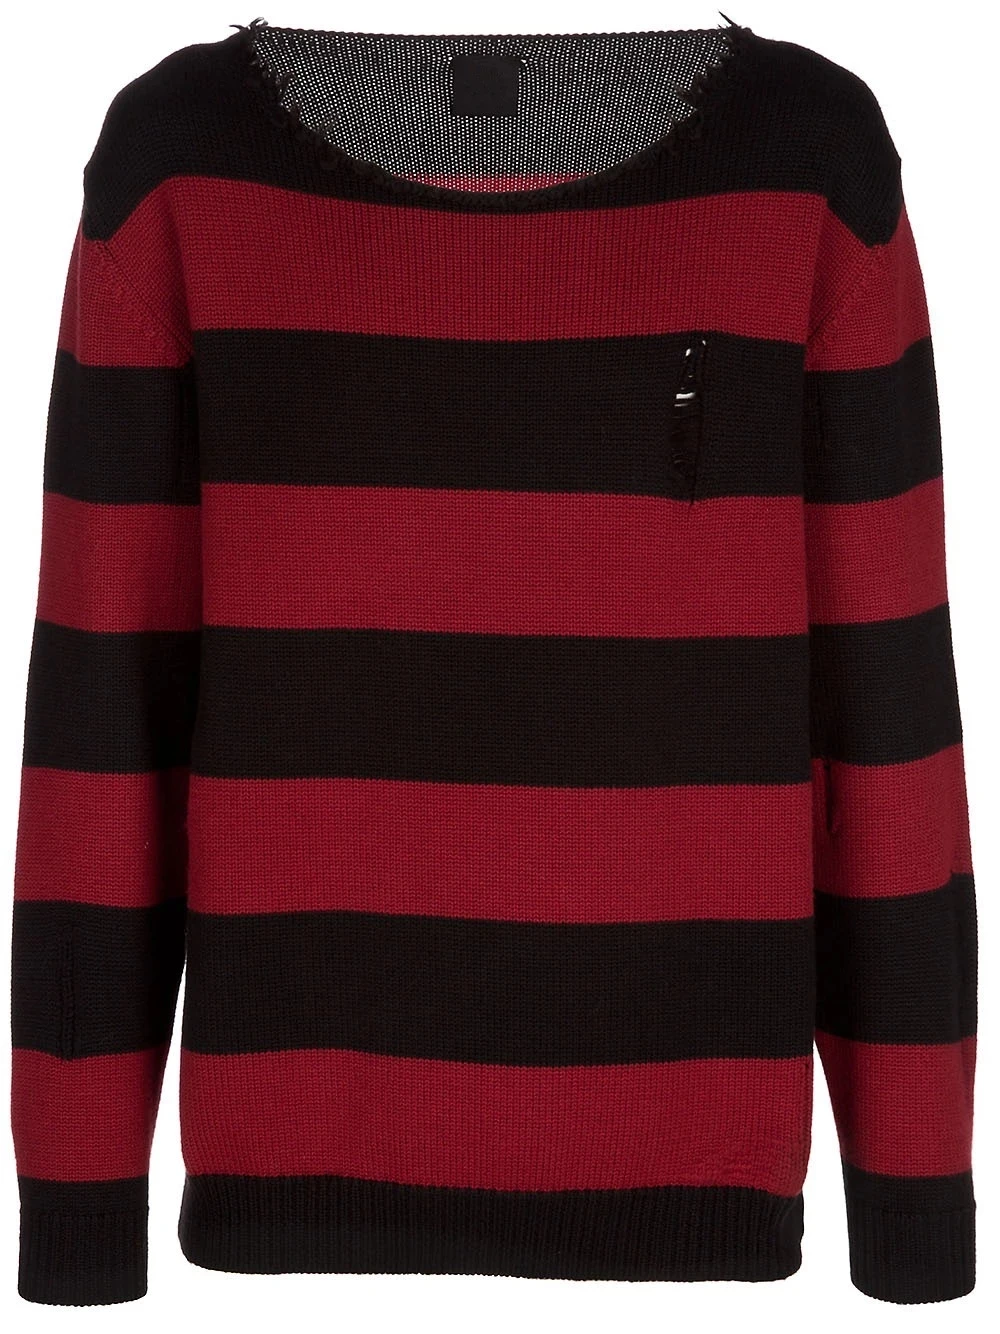 Latest Fashion Pullover Men Red Black Striped Sweater - Buy Striped